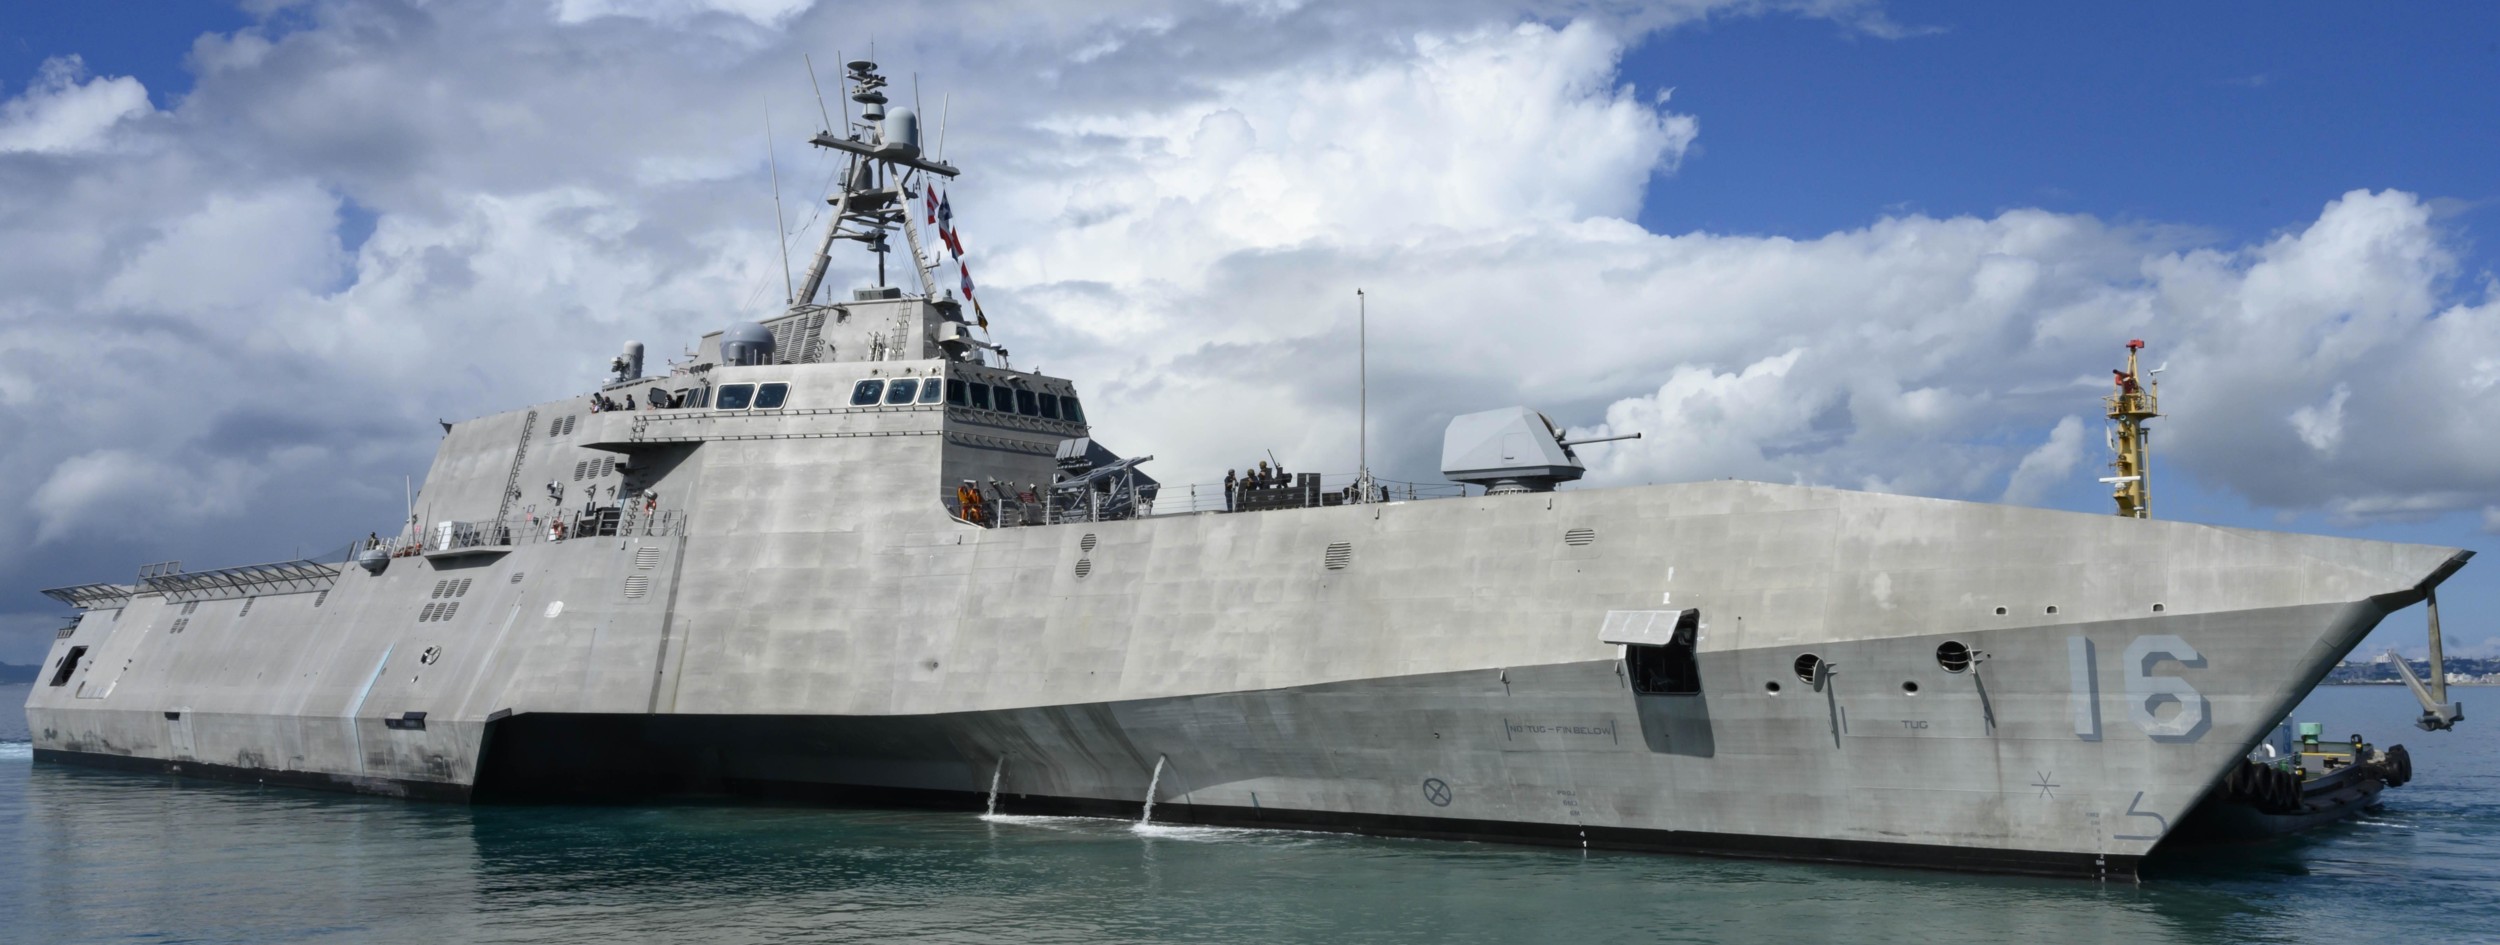 lcs-16 uss tulsa independence class littoral combat ship us navy white beach naval facility okinawa 40